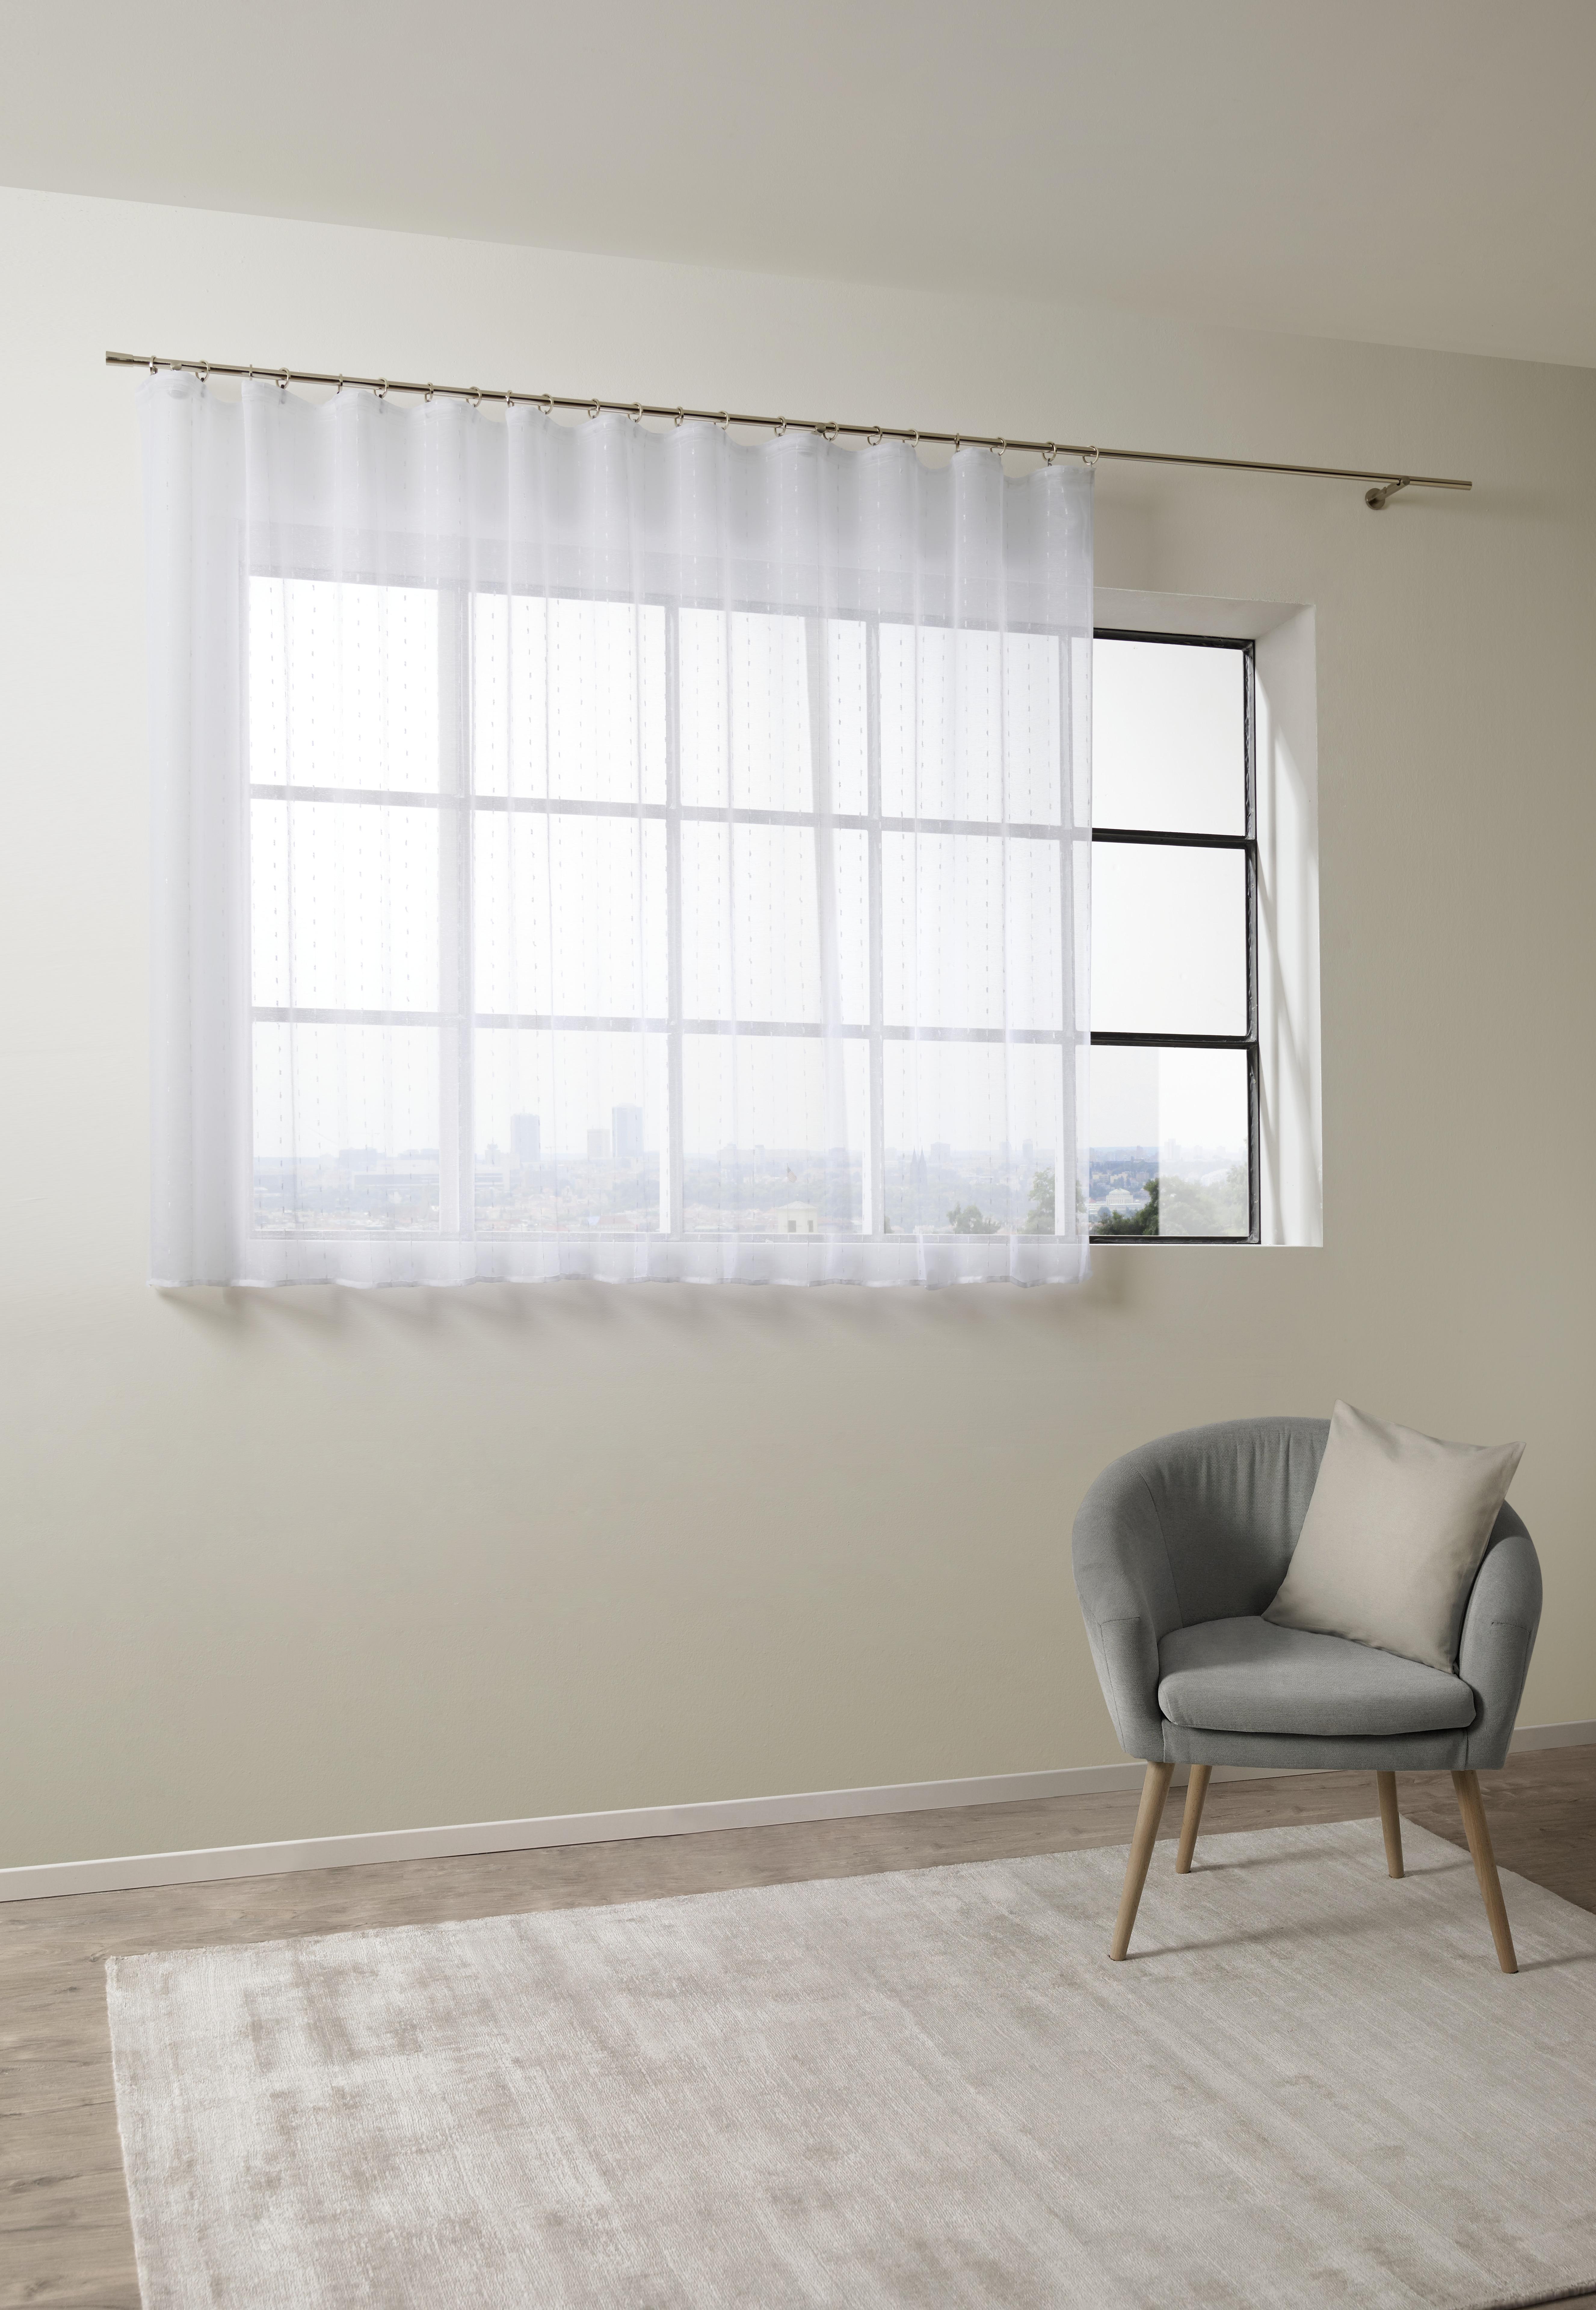 Készfüggöny Lisa 300/140 - Fehér, romantikus/Landhaus, Textil (300/140cm) - Modern Living